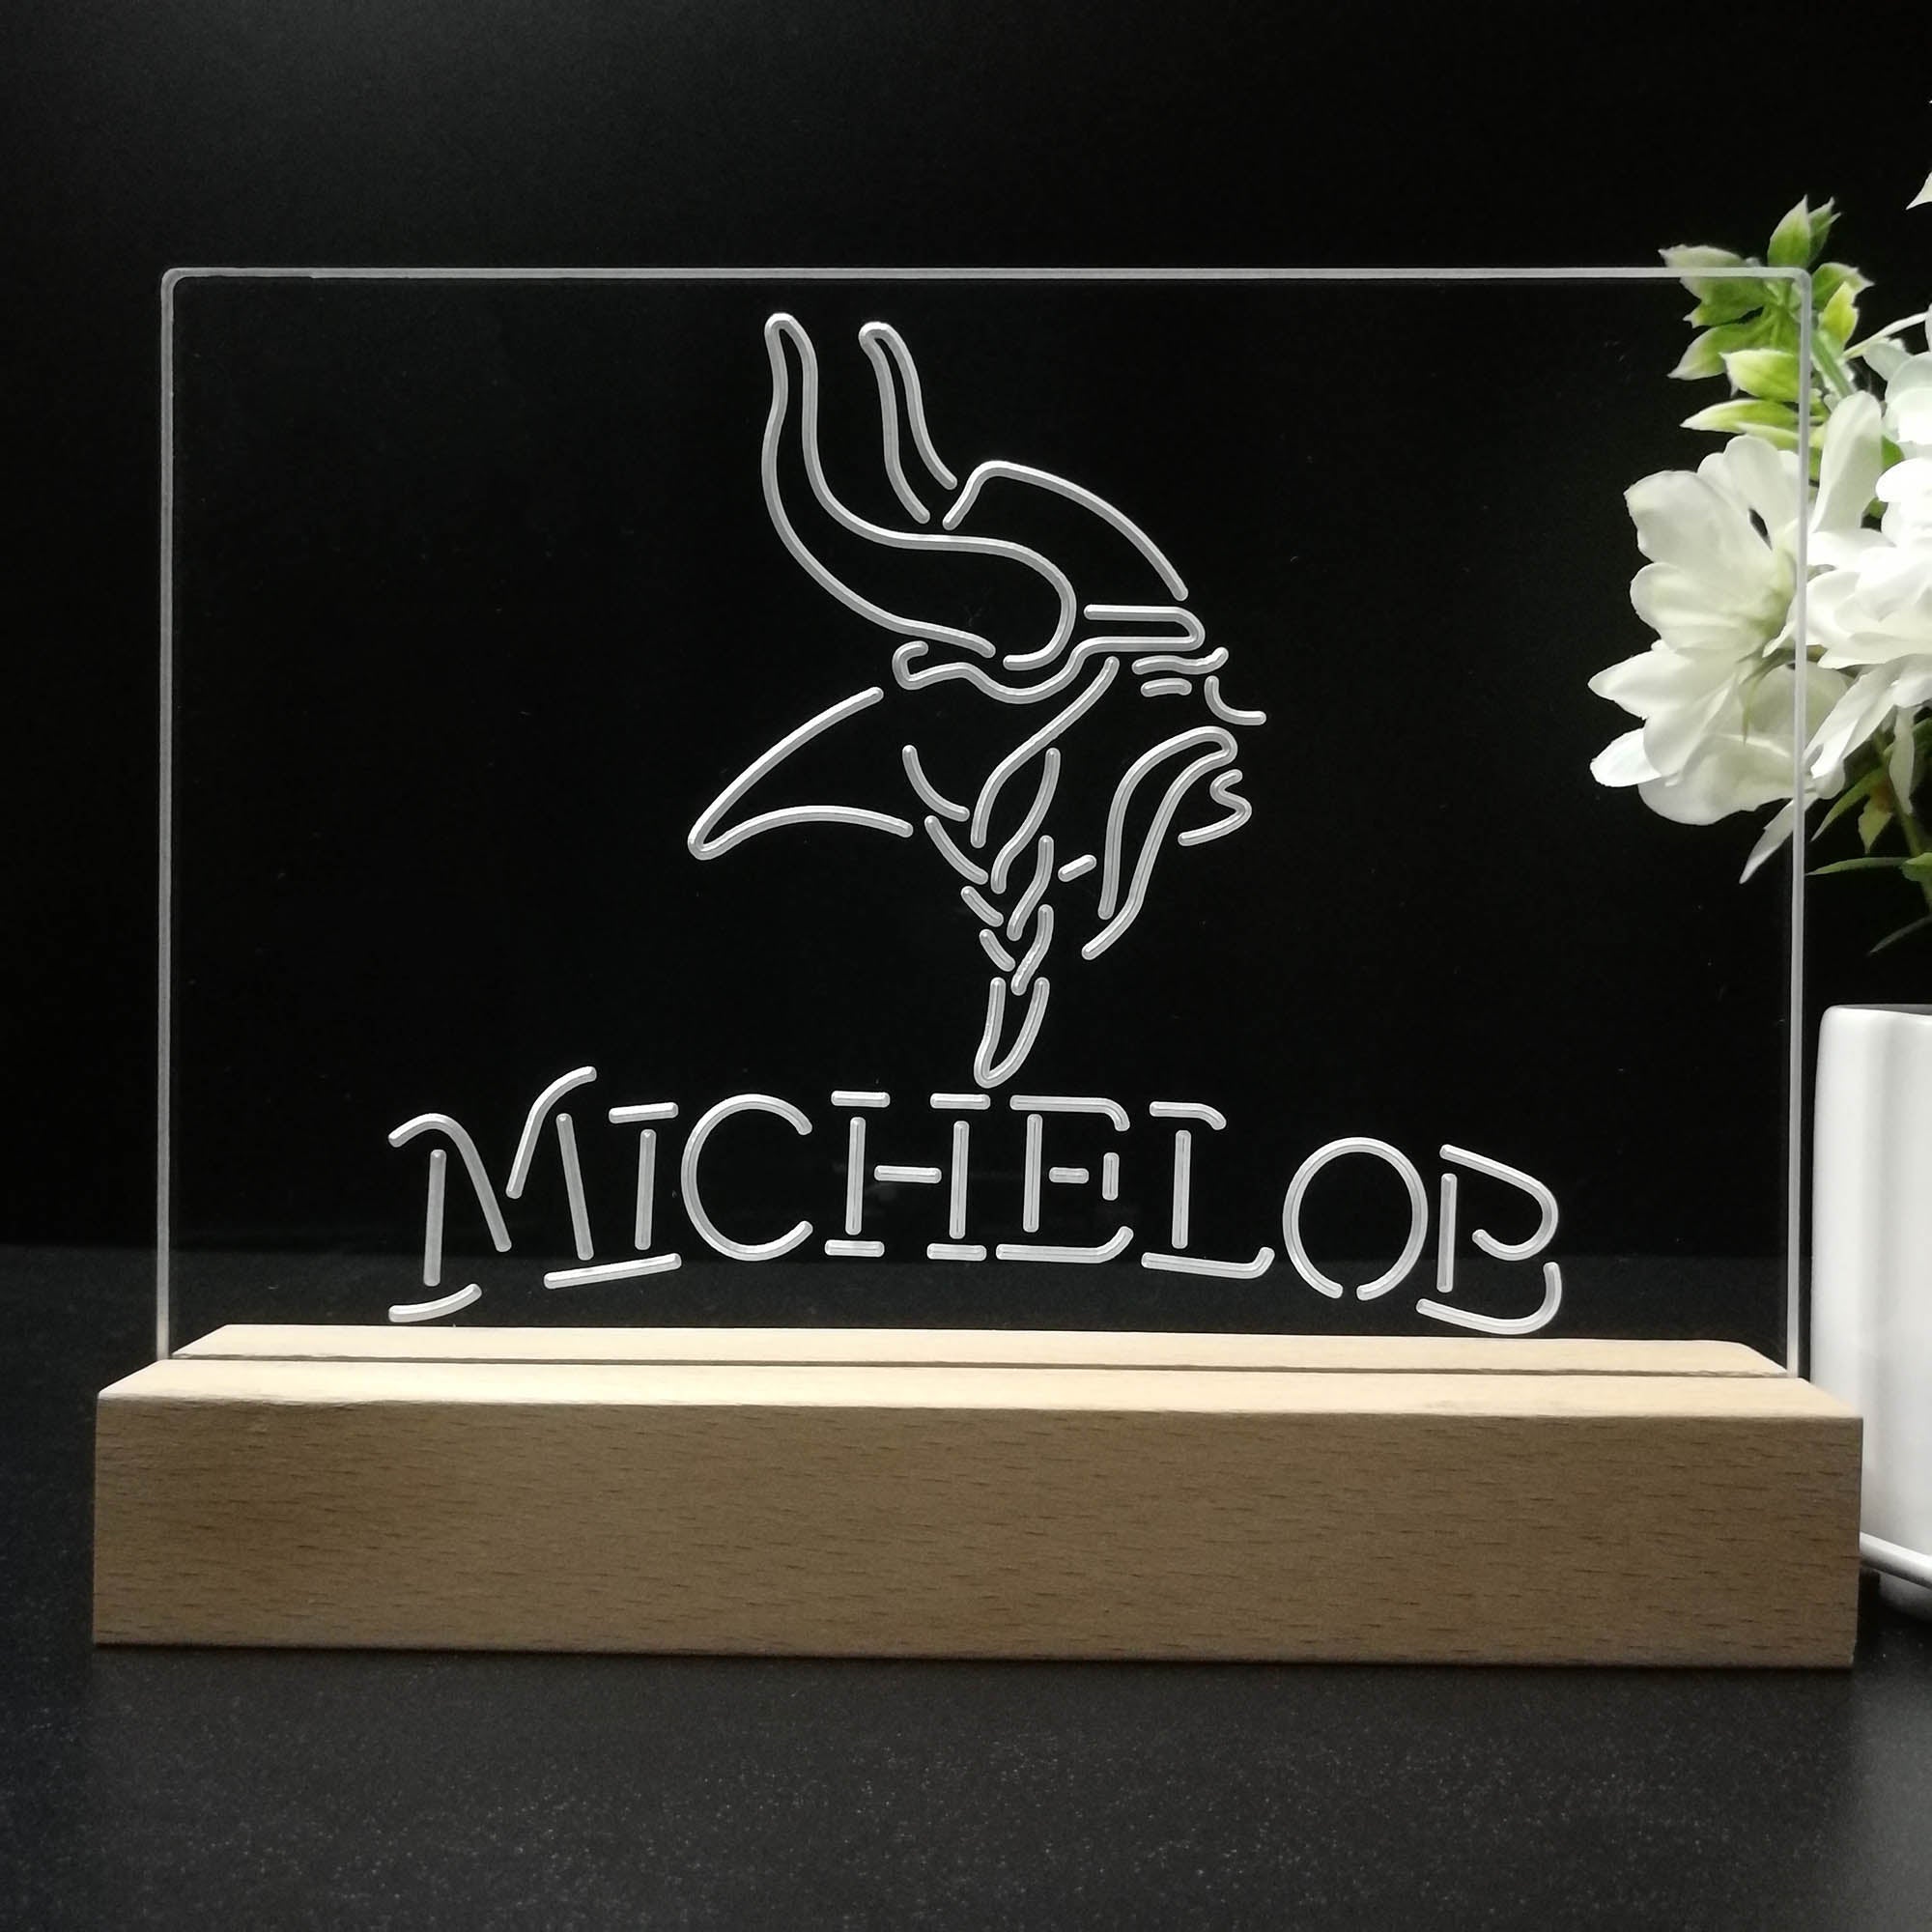 Michelob Bar Minnesota Vikings 3D Illusion Night Light Desk Lamp